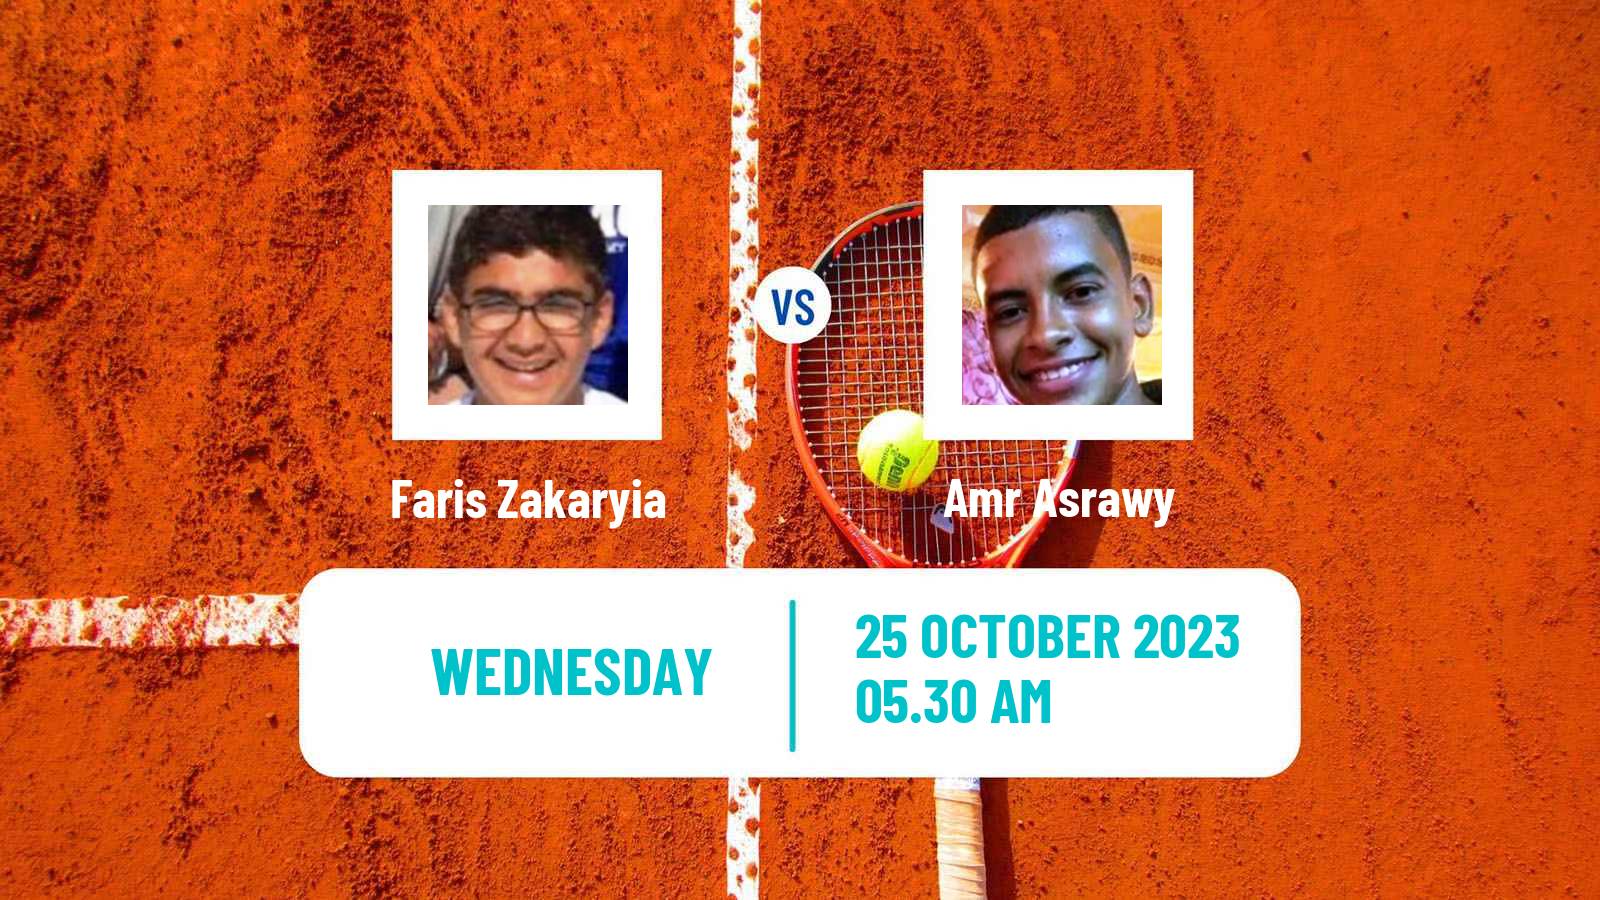 Tennis ITF M15 Sharm Elsheikh 15 Men 2023 Faris Zakaryia - Amr Asrawy